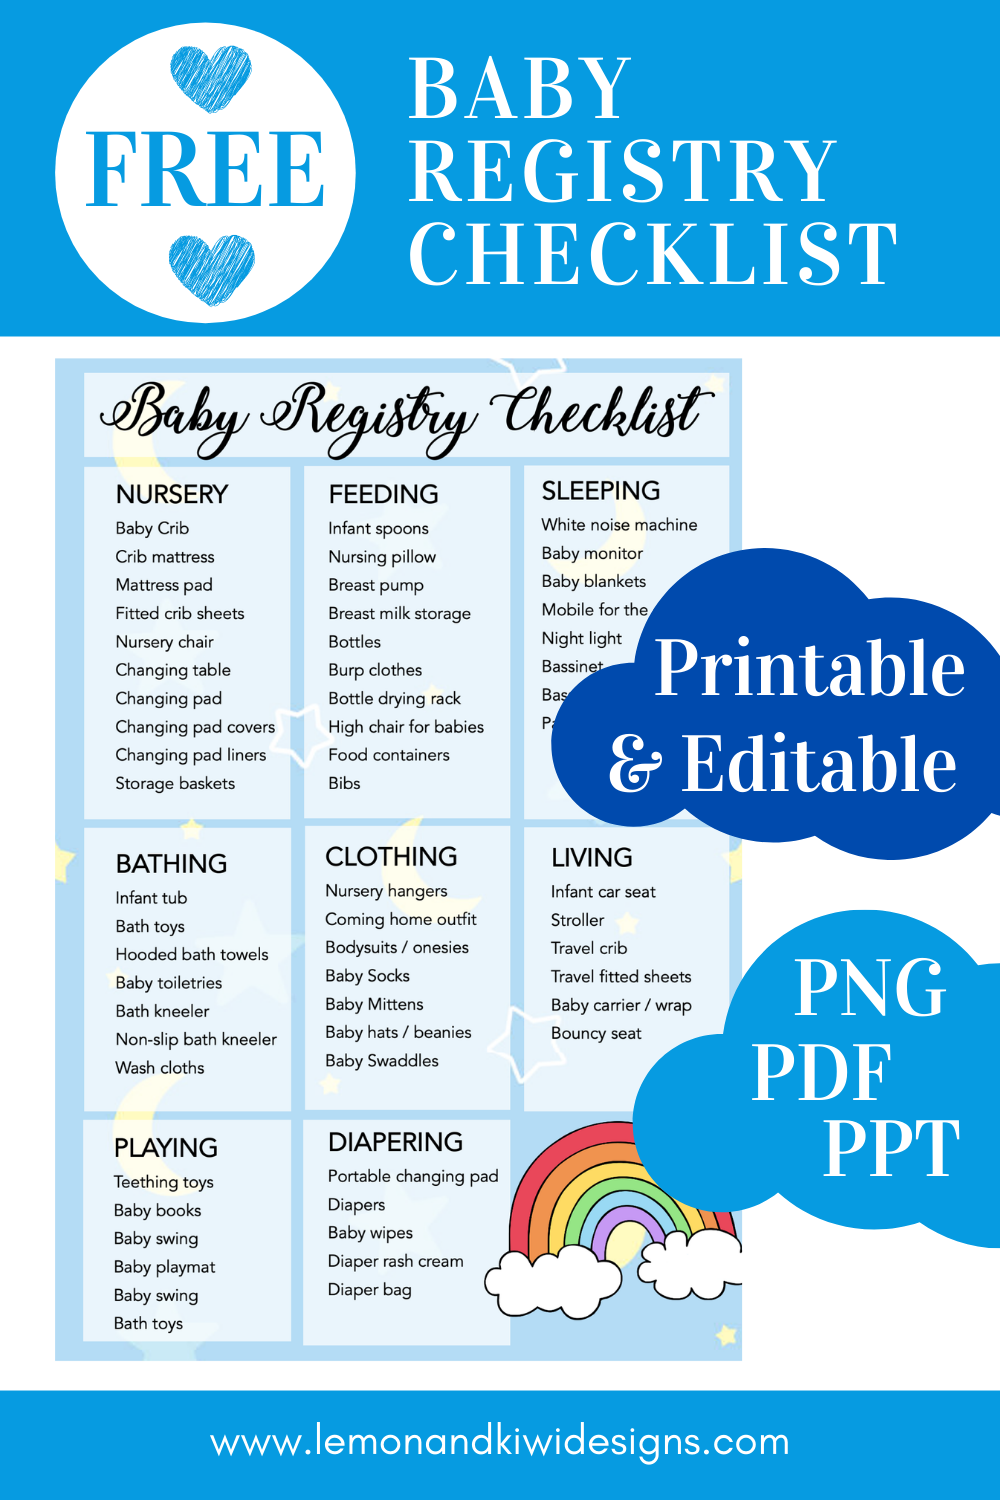 Free Printable and Editable Baby Registry Checklist